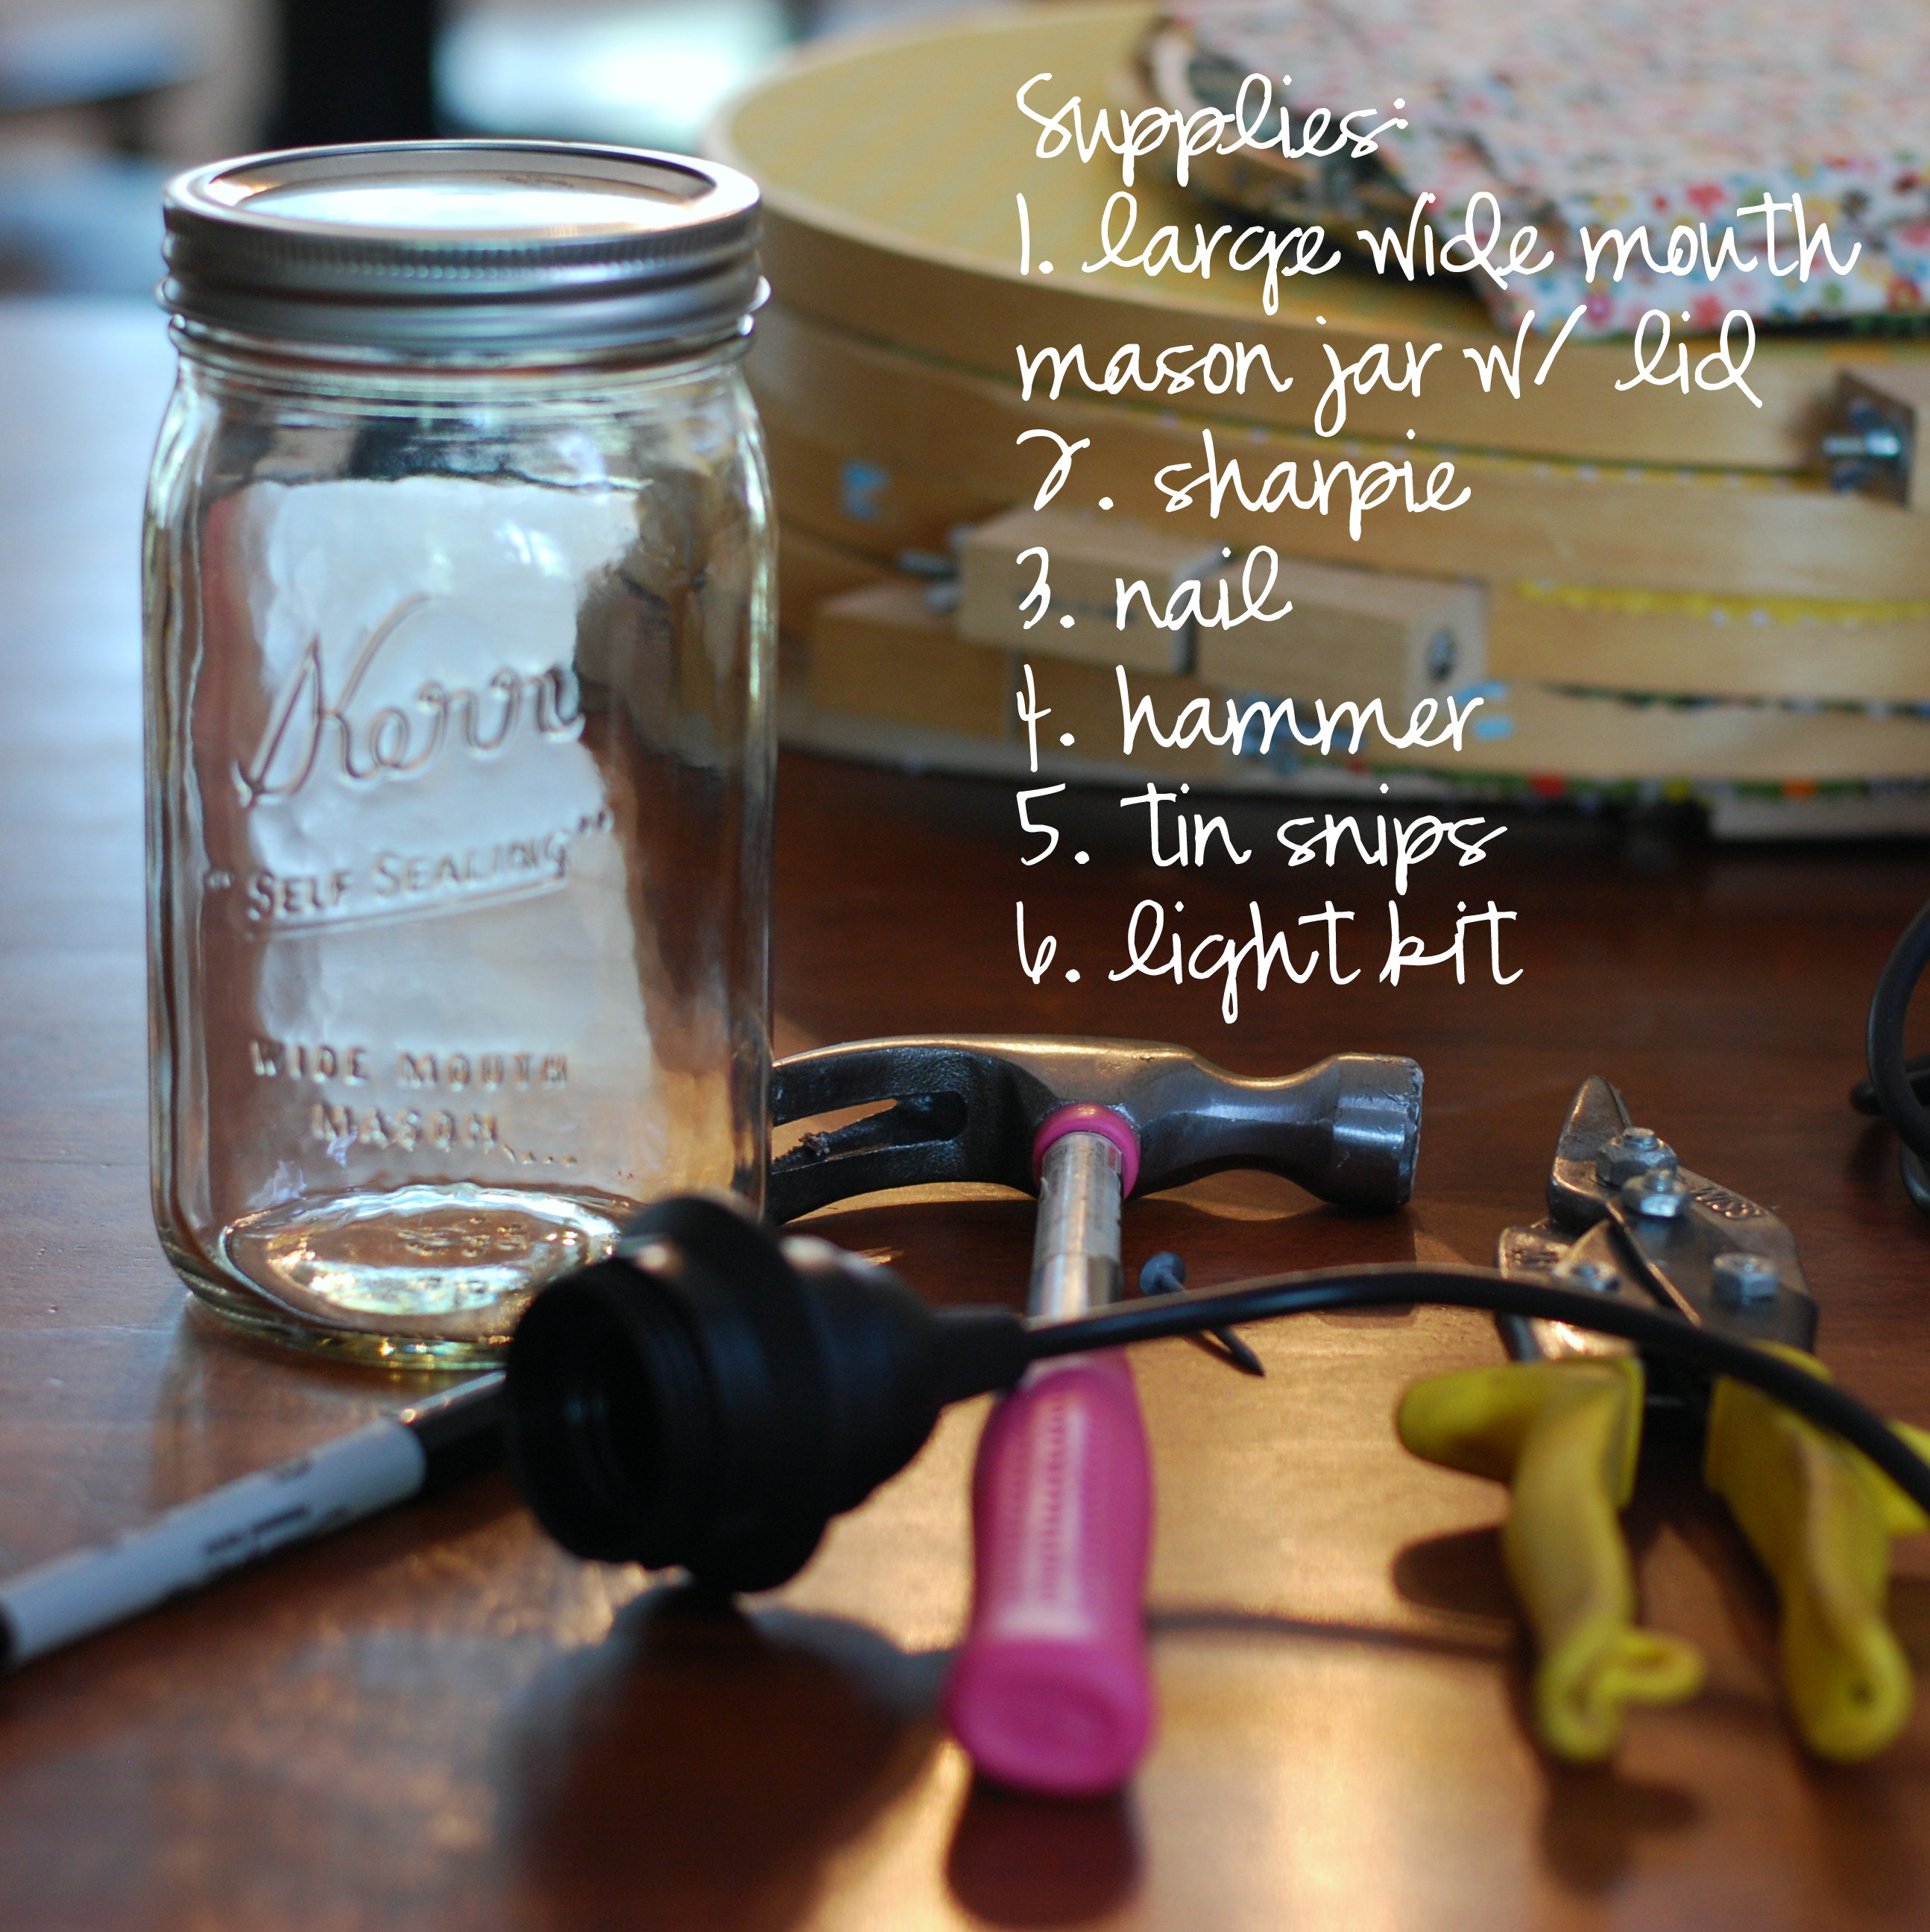 Best ideas about Mason Jar Pendant Light DIY
. Save or Pin diy mason jar pendant light – home is what you make it Now.